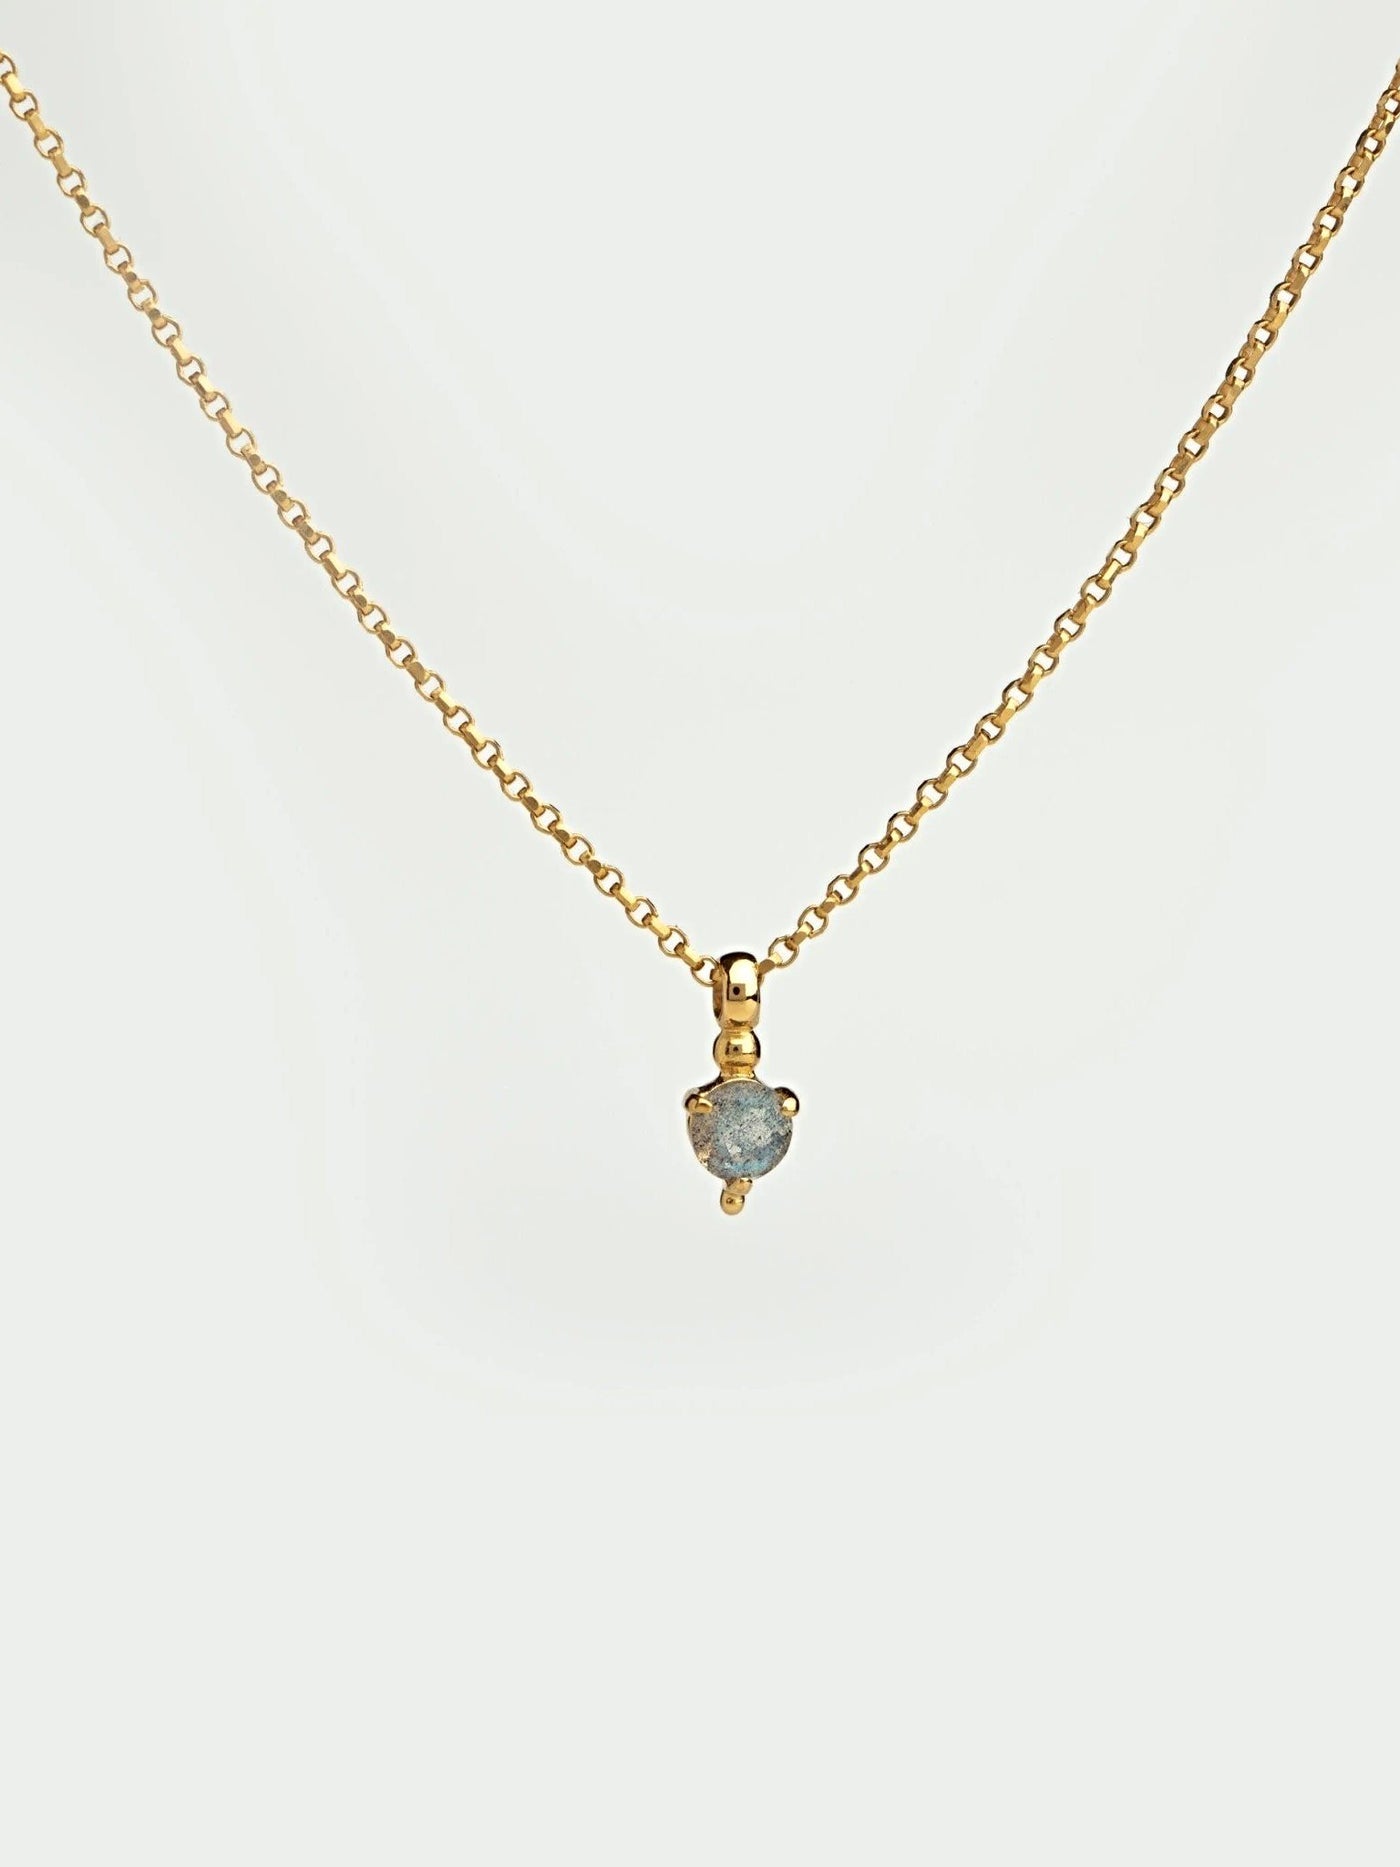 Eddy Labradorite Necklace - 19.724K Gold PlatedBackUpItemsBirthstone NecklaceLunai Jewelry